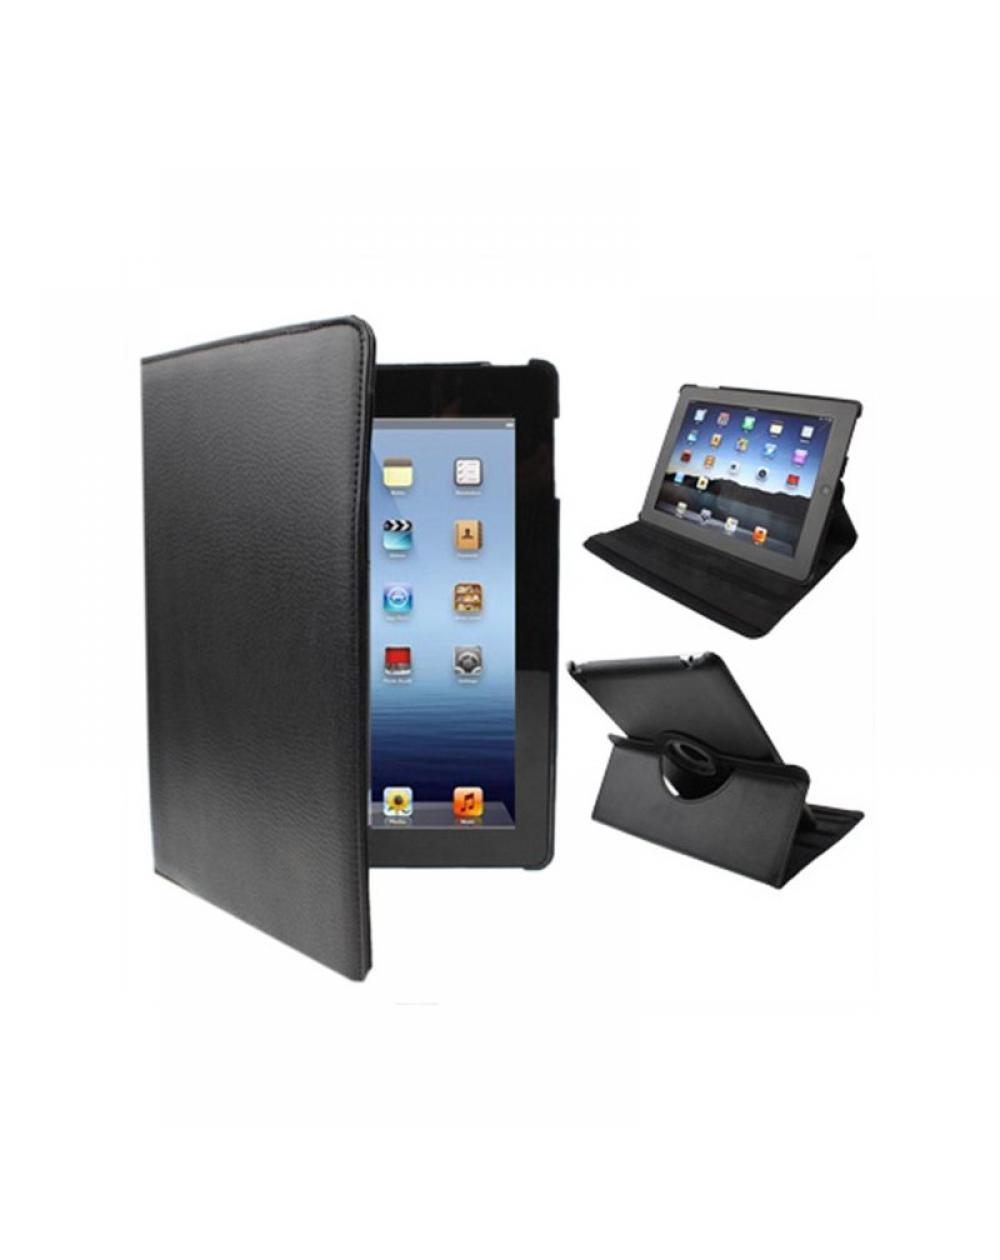 Funda COOL para iPad 2 / iPad 3 / 4 Giratoria Polipiel color Negro (Soporte)